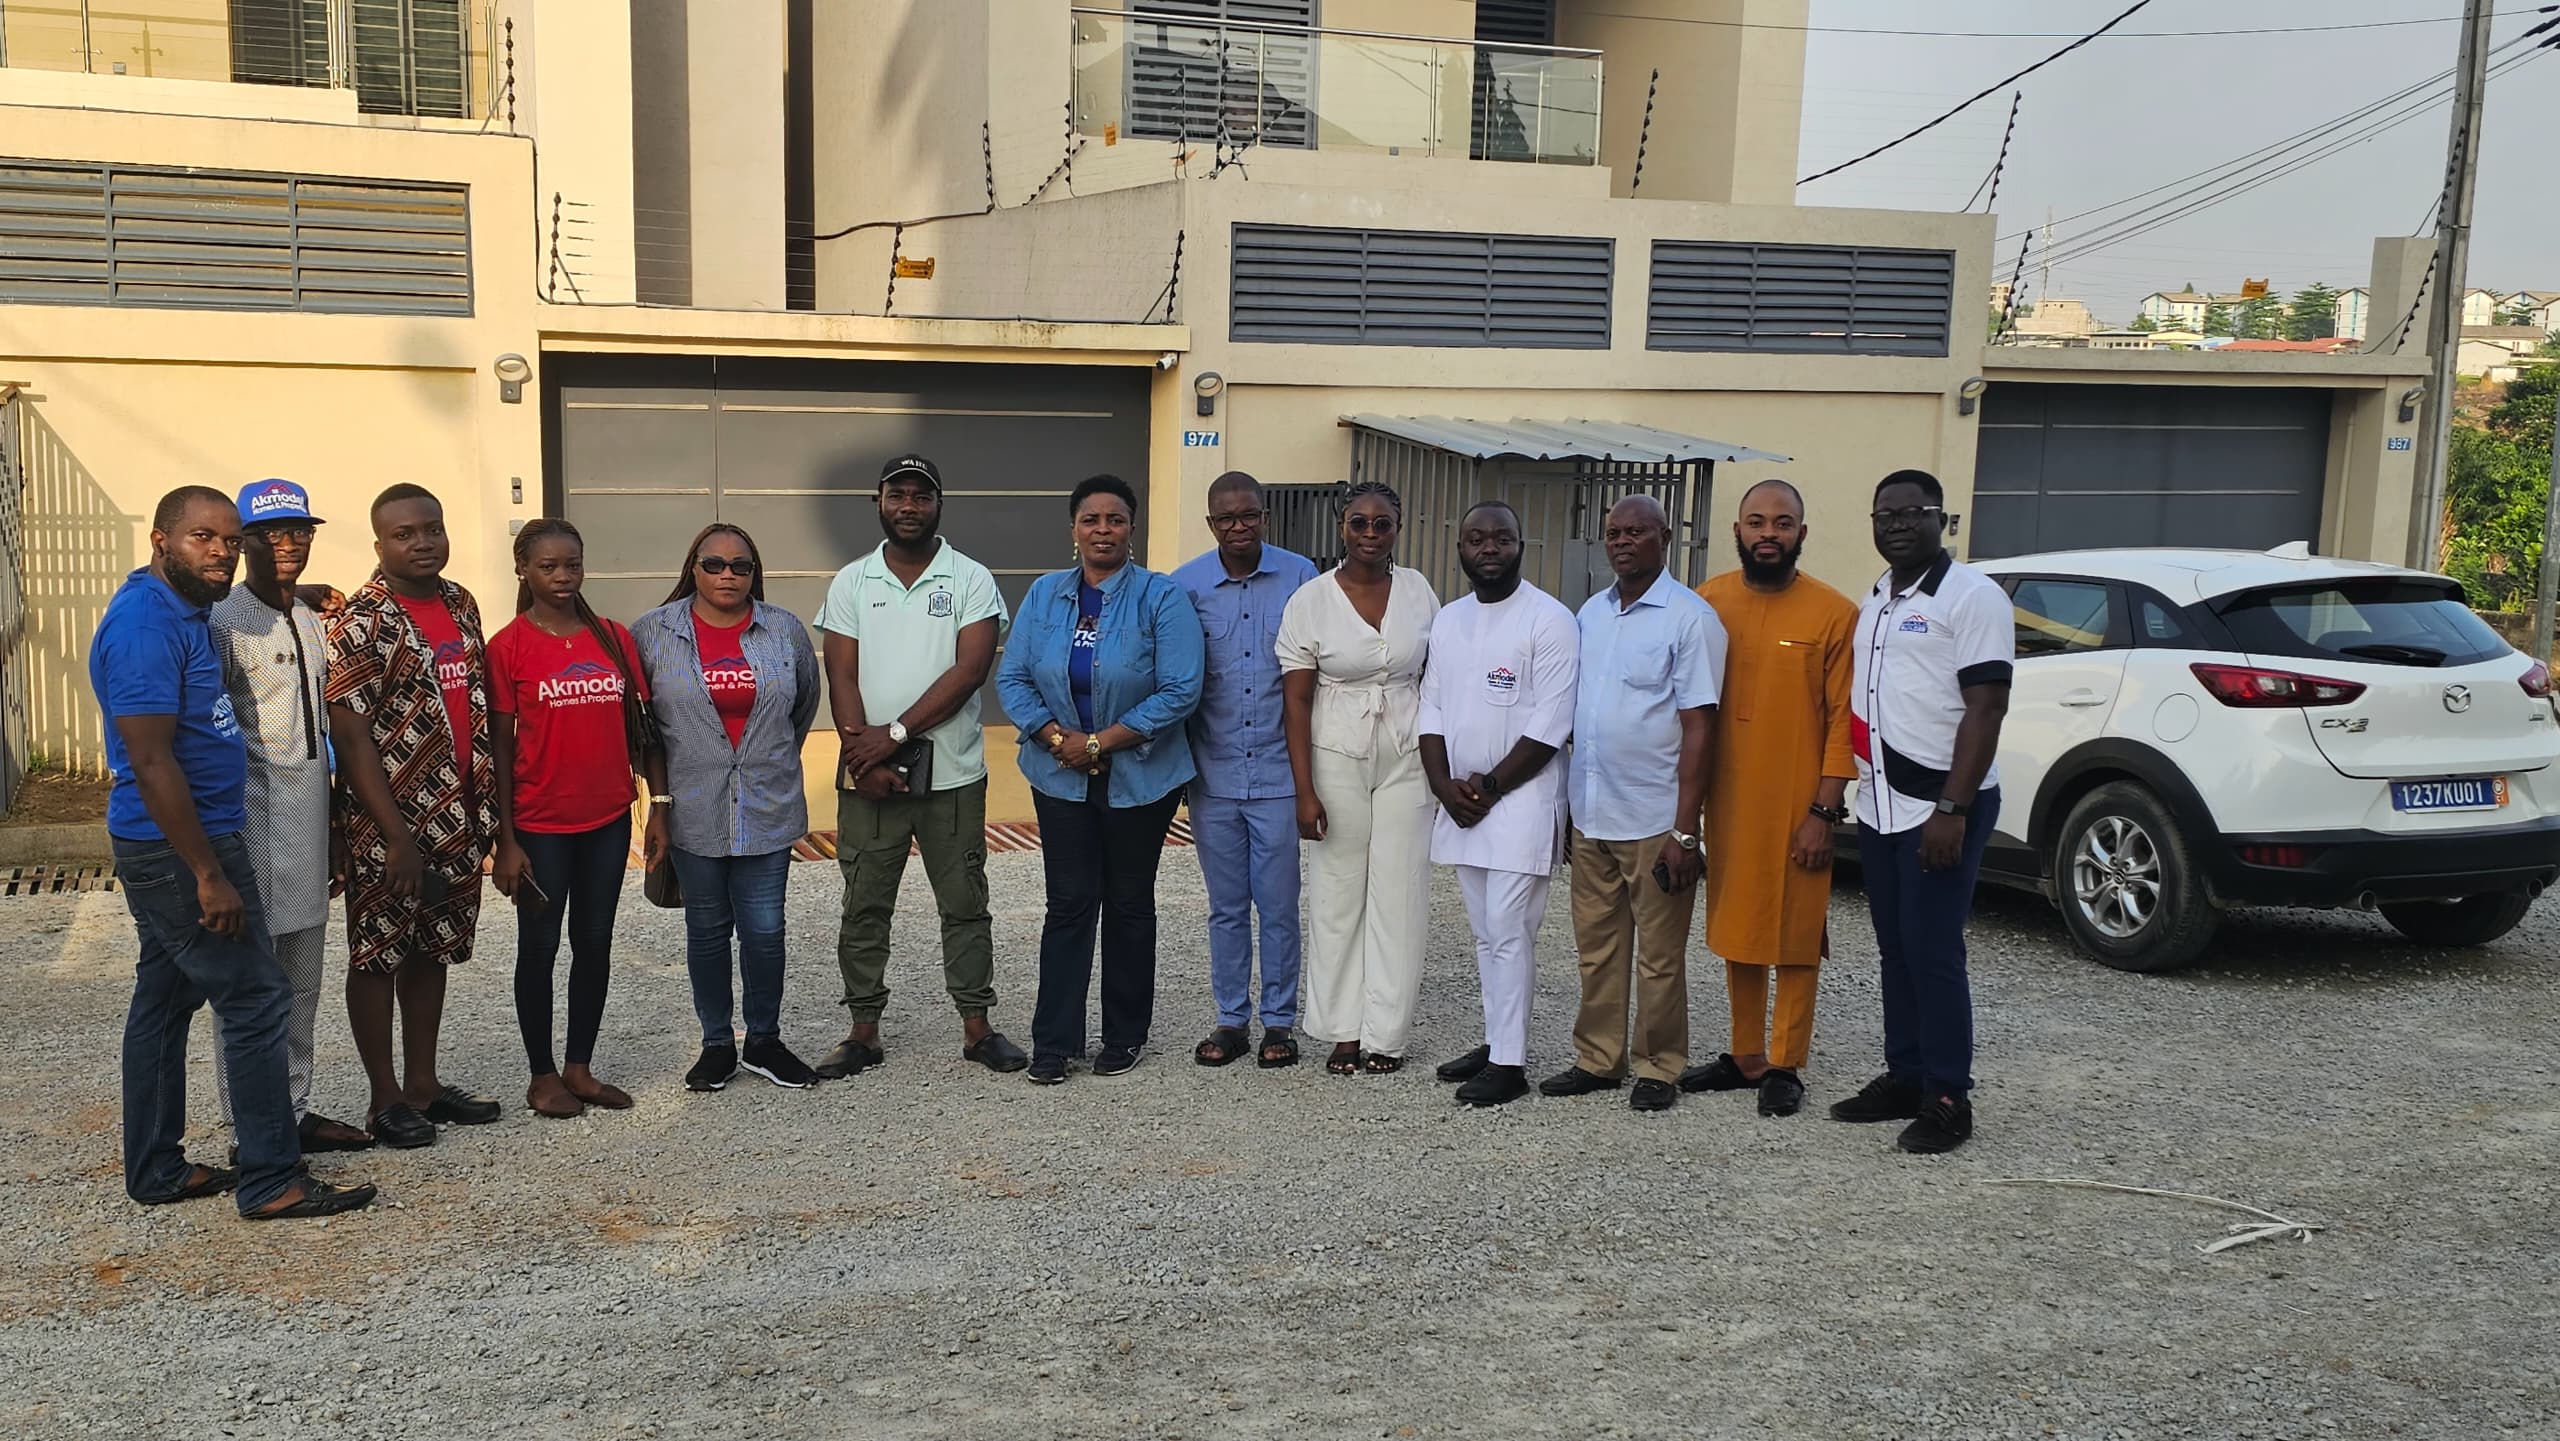 AKMODEL Team Meets Top Builder In Cote d'Ivoire